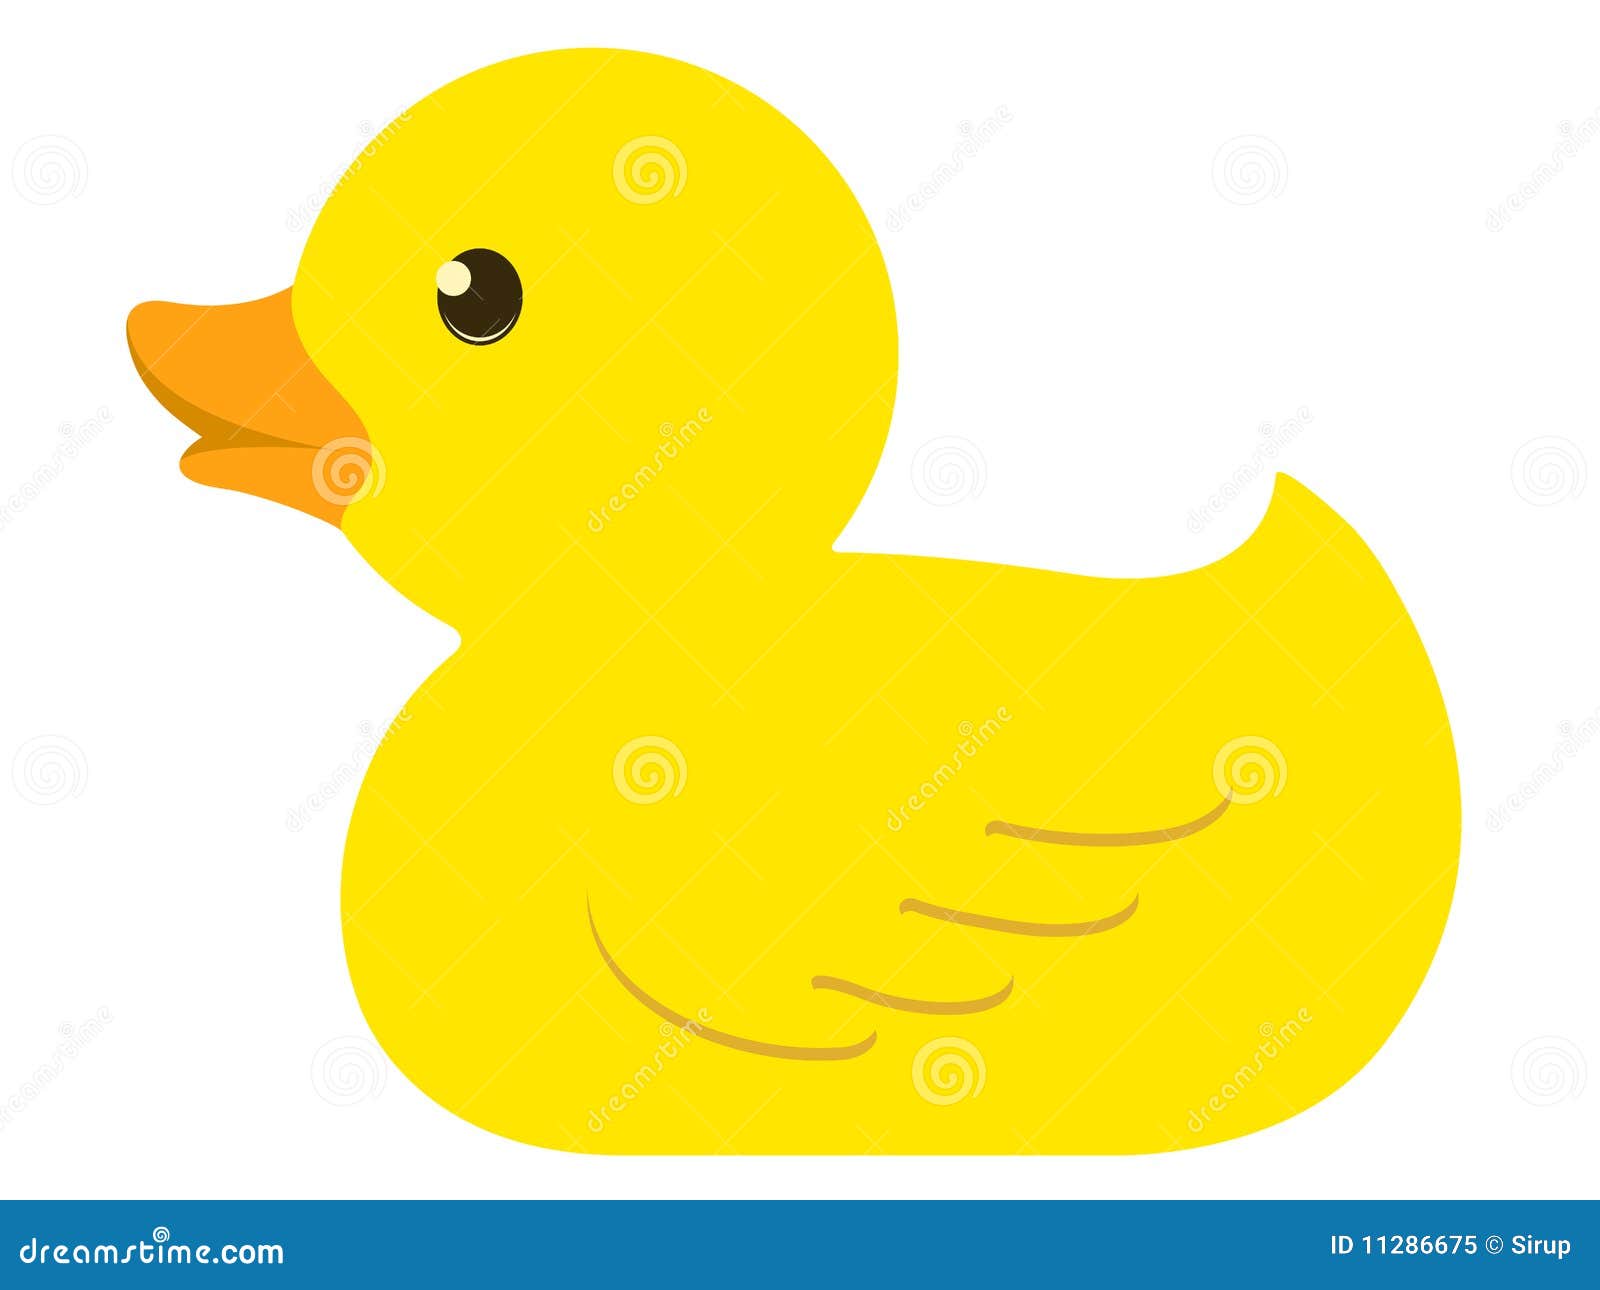  rubber duck